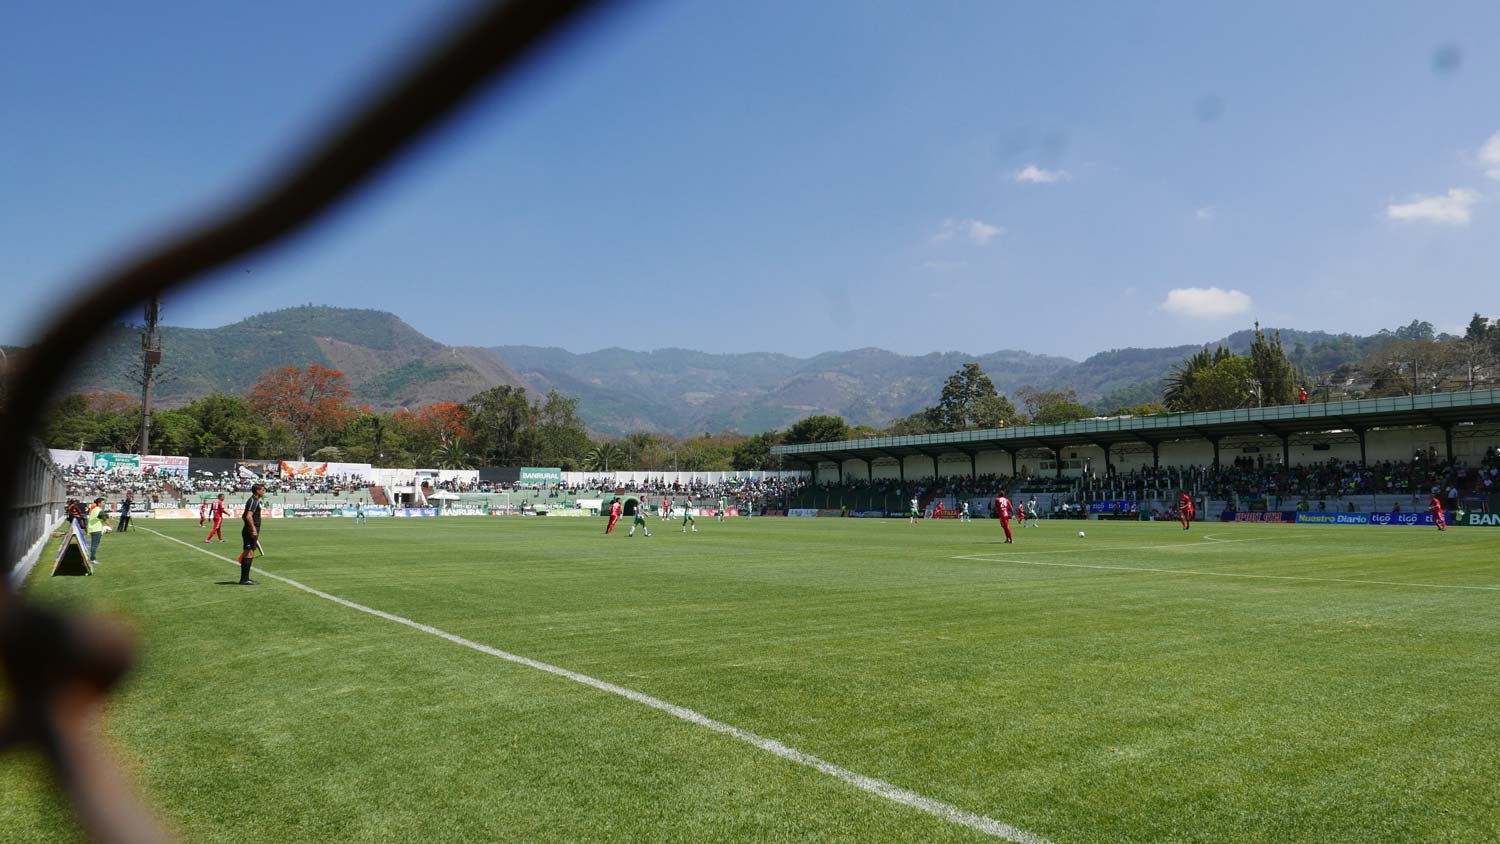 Match in Estadio Pensativo in Antigua Guatemala